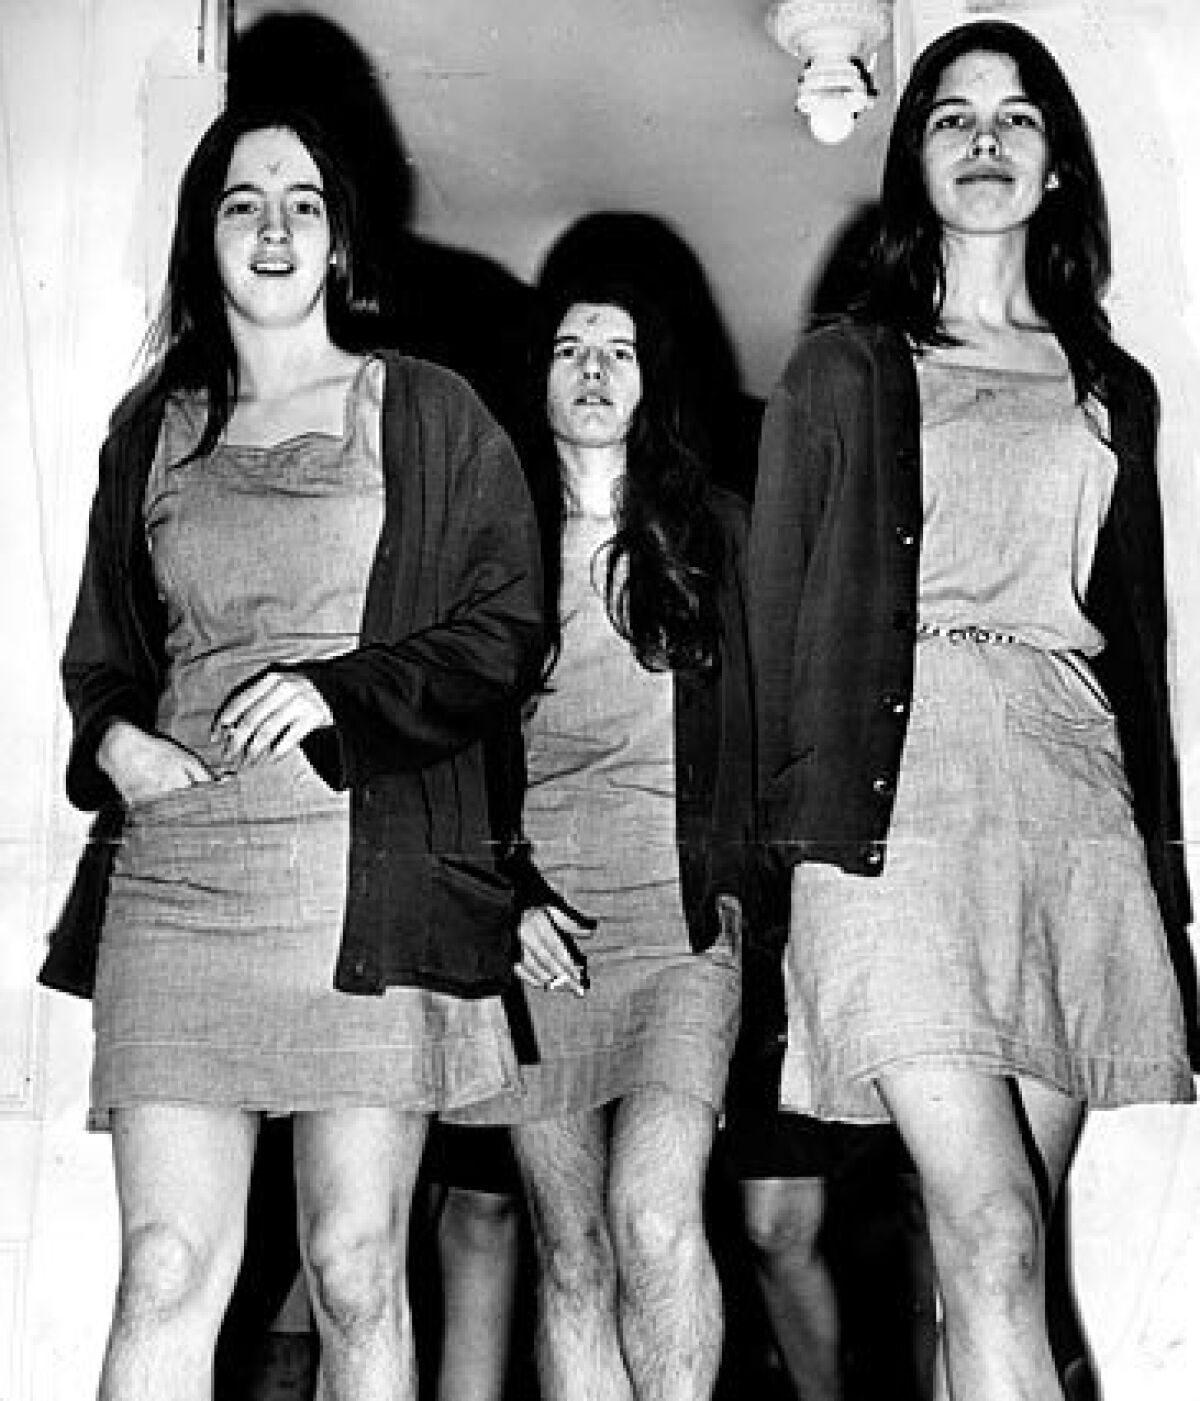 Manson followers Susan Atkins, left, Patricia Krenwinkel and Leslie Van Houten head into court in 1970.